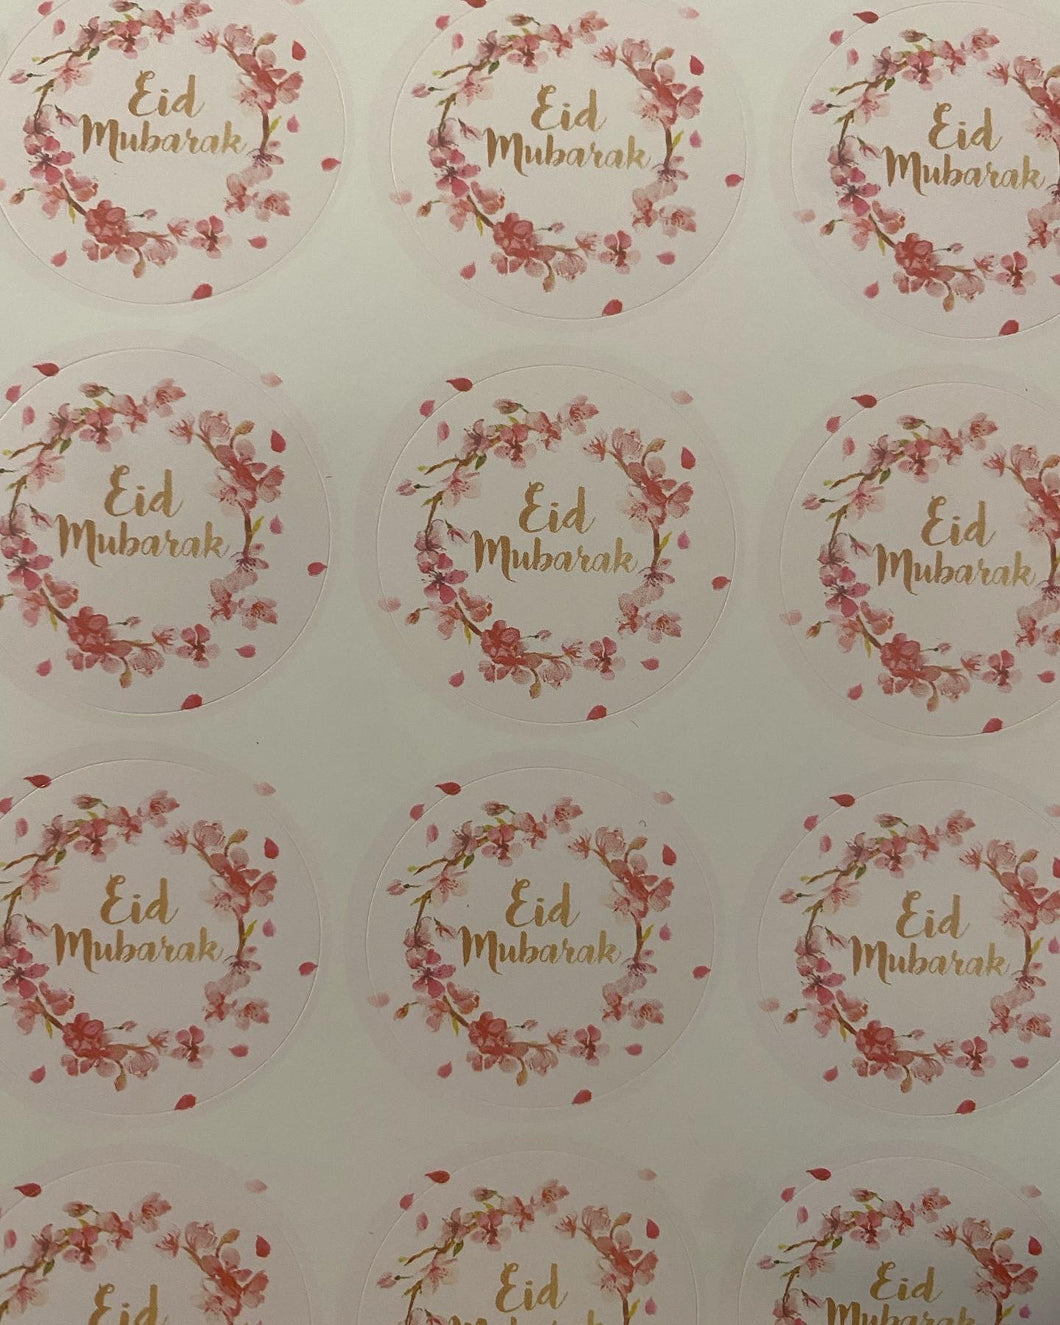 Floral Eid Mubarak stickers